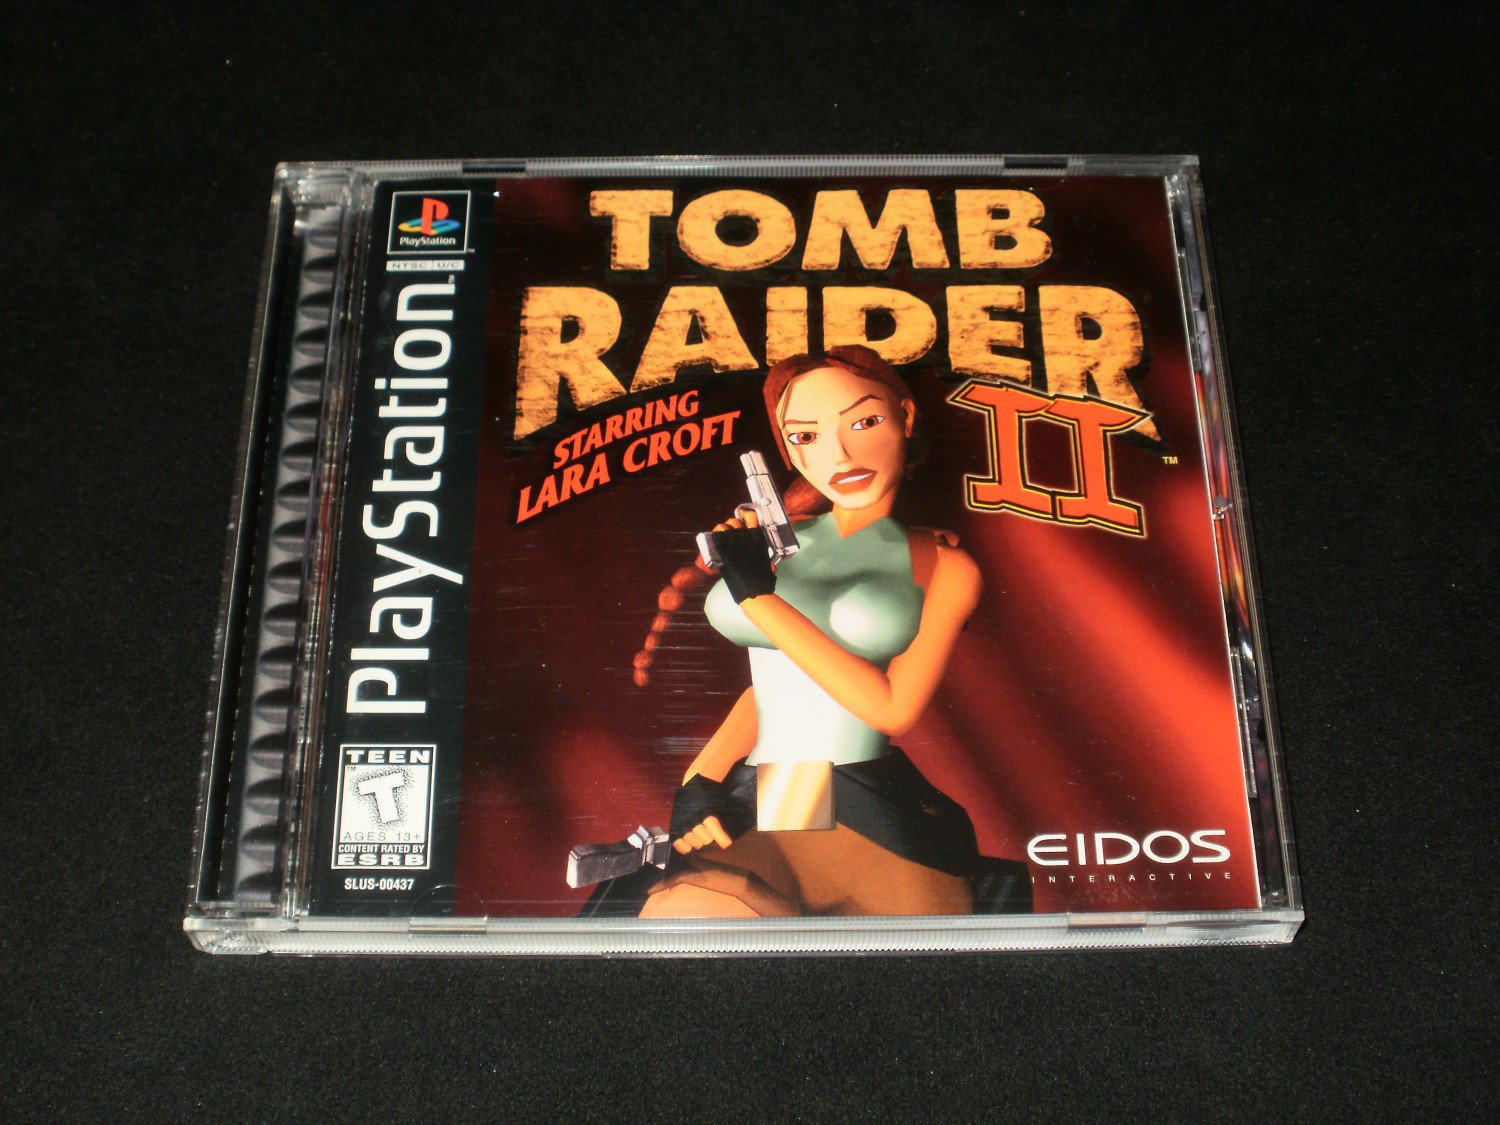 Tomb Raider II Starring Lara Croft Sony PS Complete CIB Black Label Release